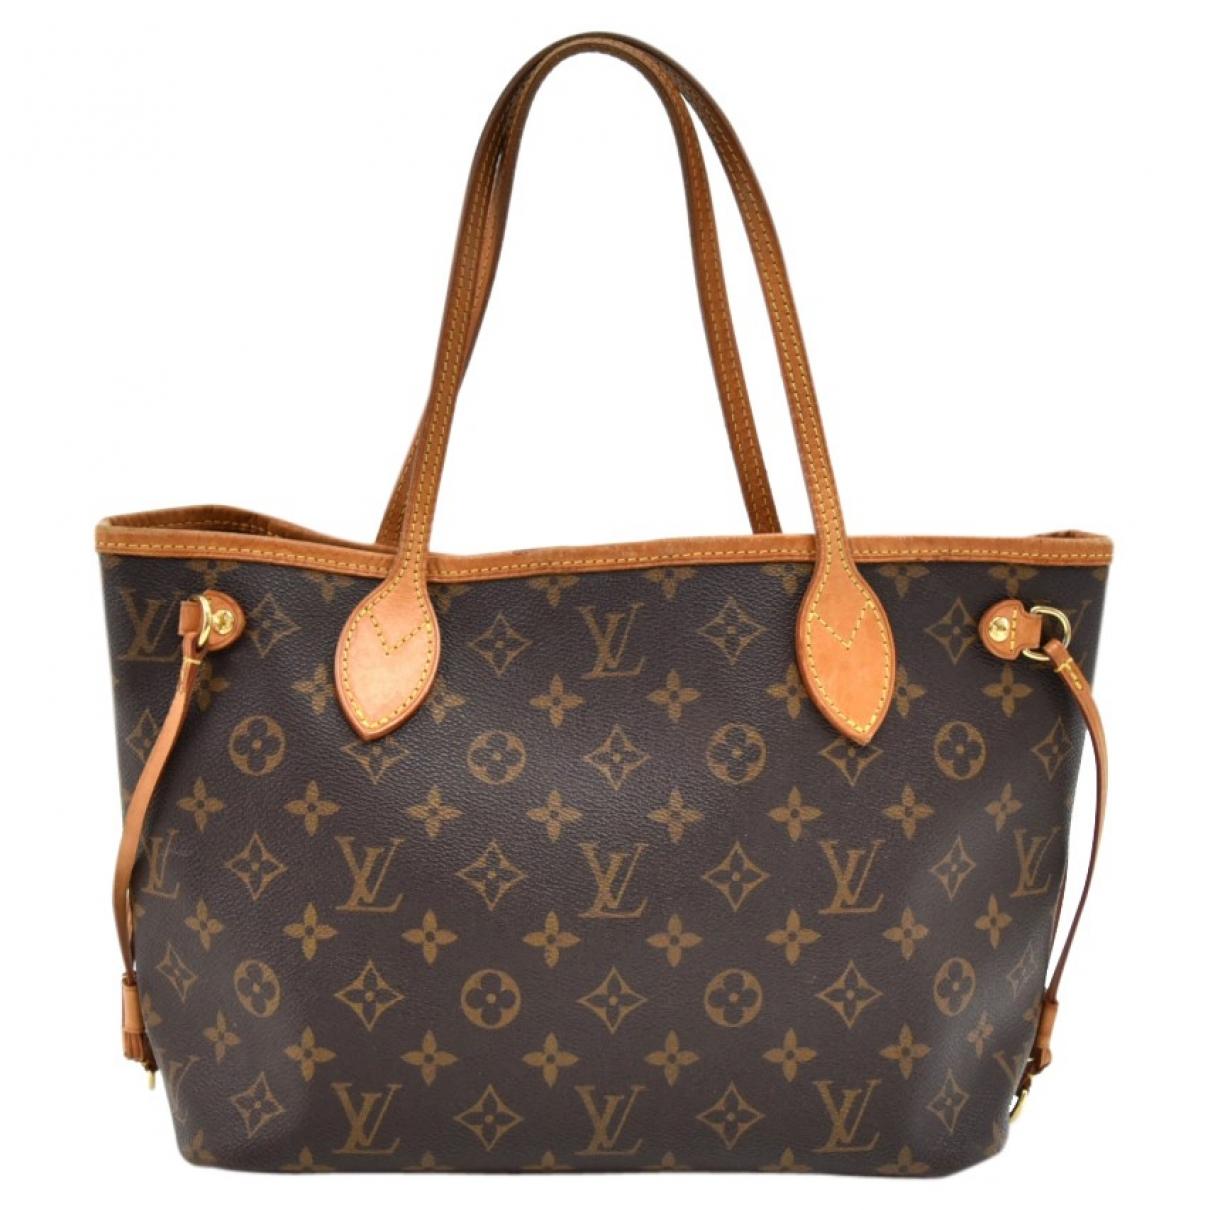 Lyst - Louis Vuitton Neverfull Brown Cloth Handbag in Brown - Save 20%